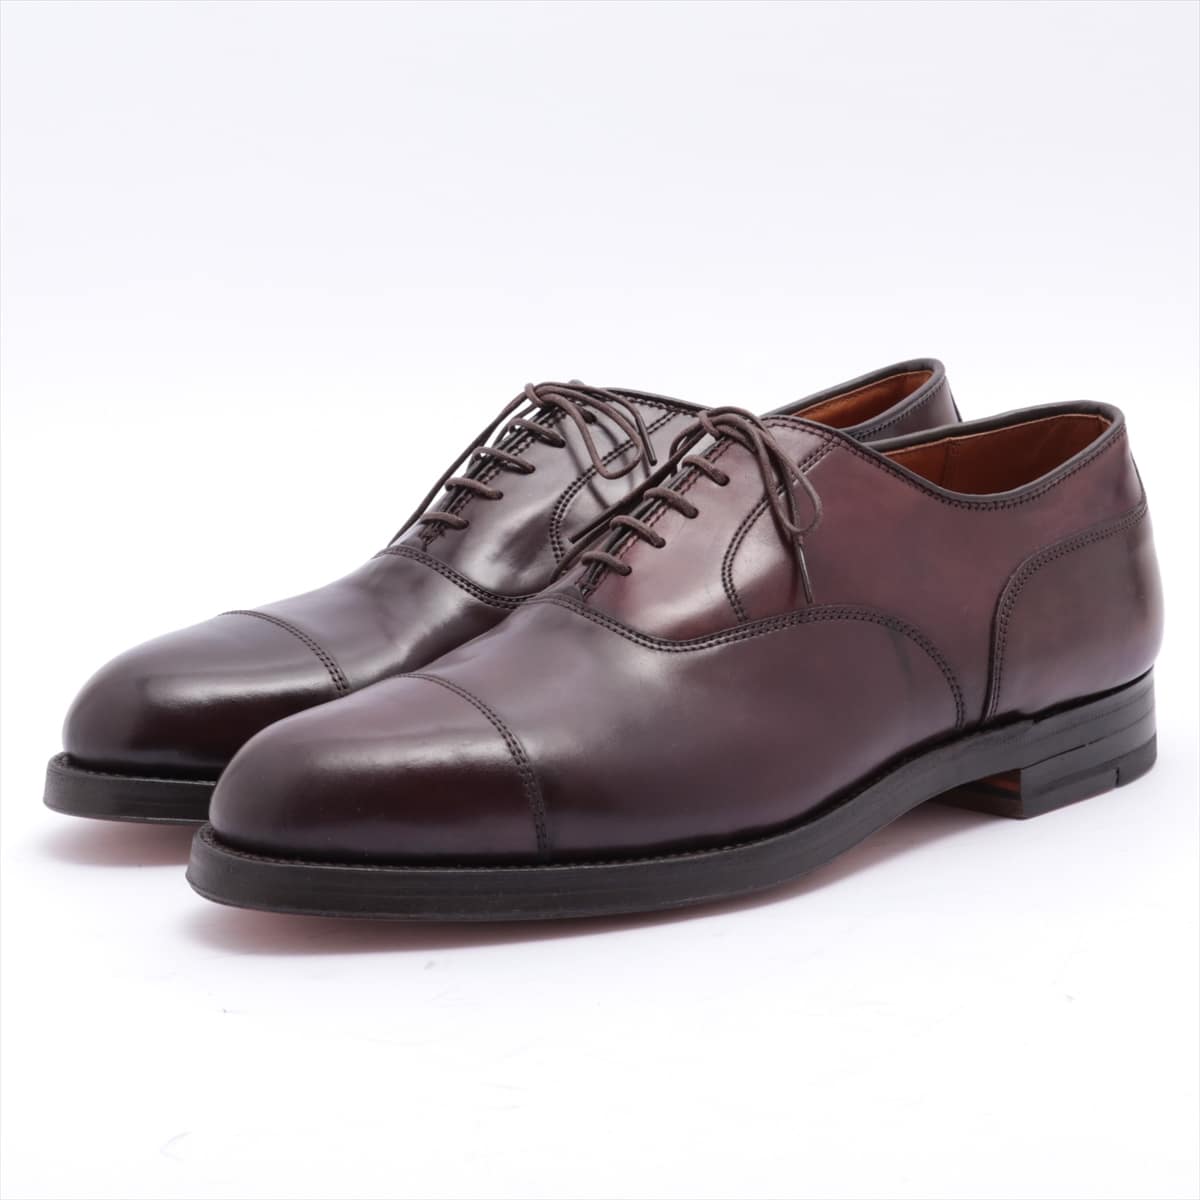 Alden Leather Shoes 9 Men's Brown Straight tip